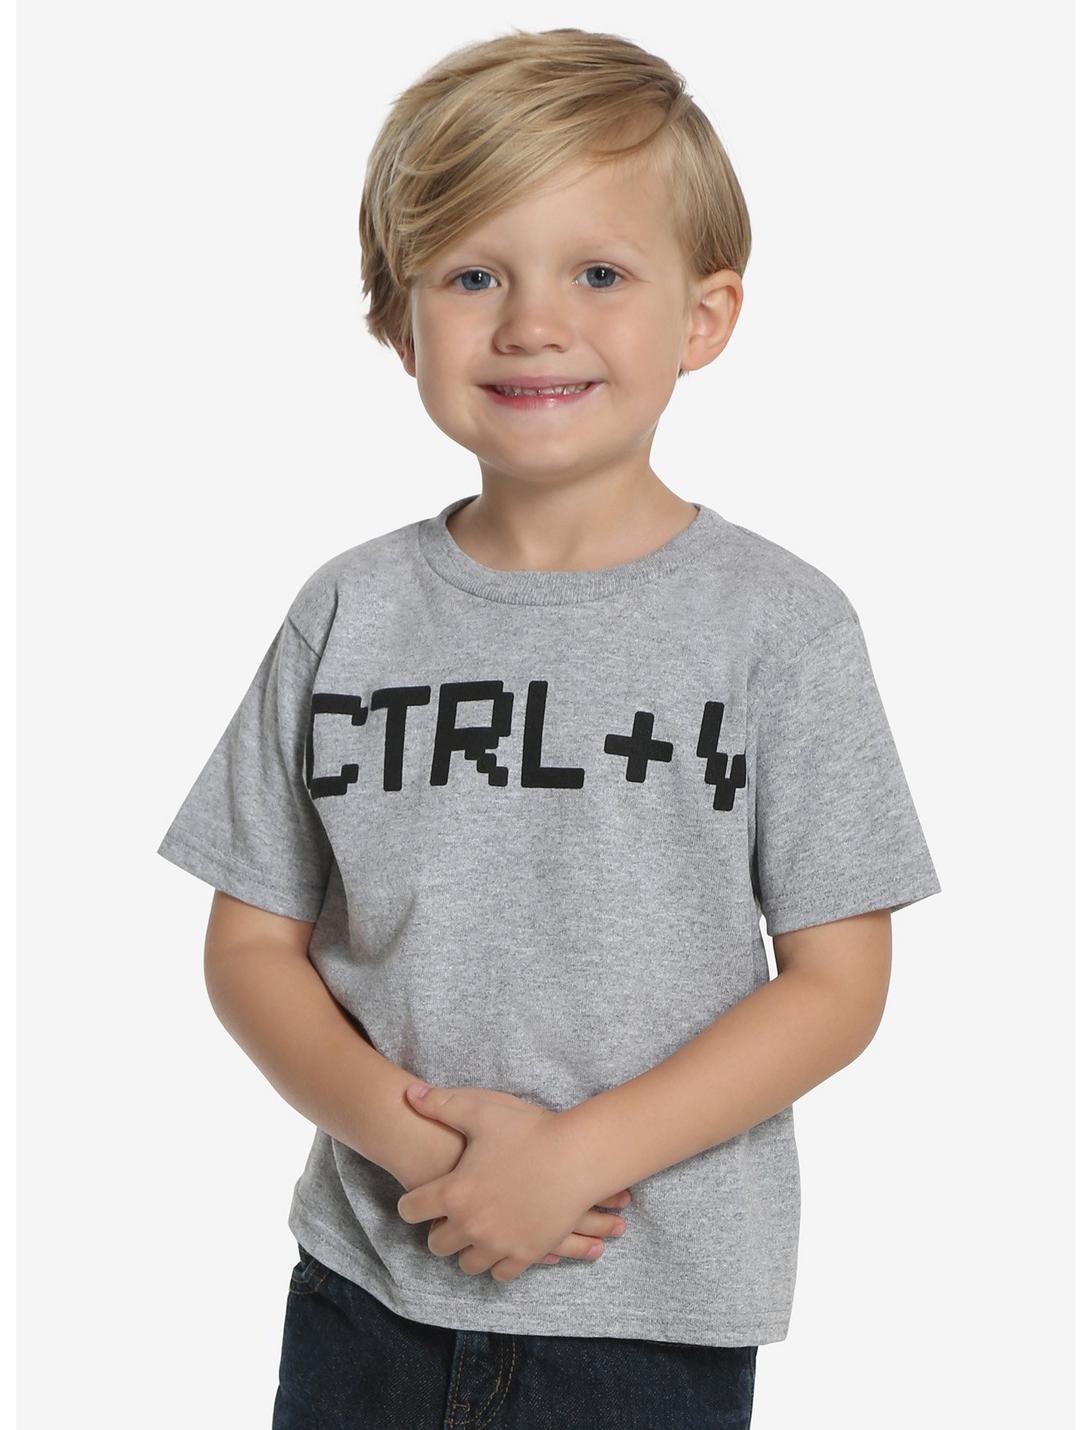 CTRL + V Toddler Tee, GREY, hi-res